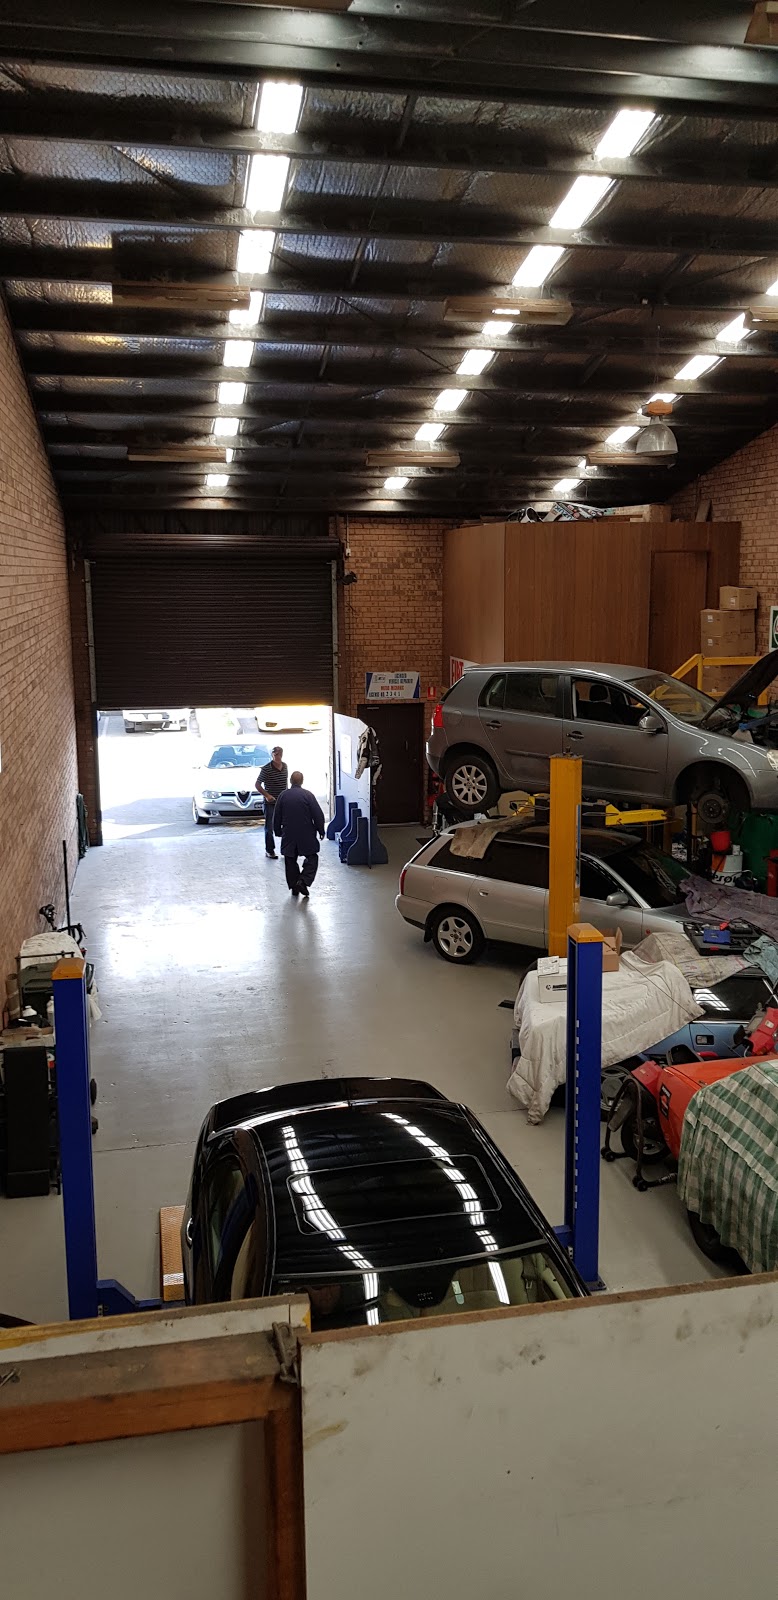 Sunset Strip Automotive | car repair | 5/30 Swan St, Wollongong NSW 2500, Australia | 0242285054 OR +61 2 4228 5054